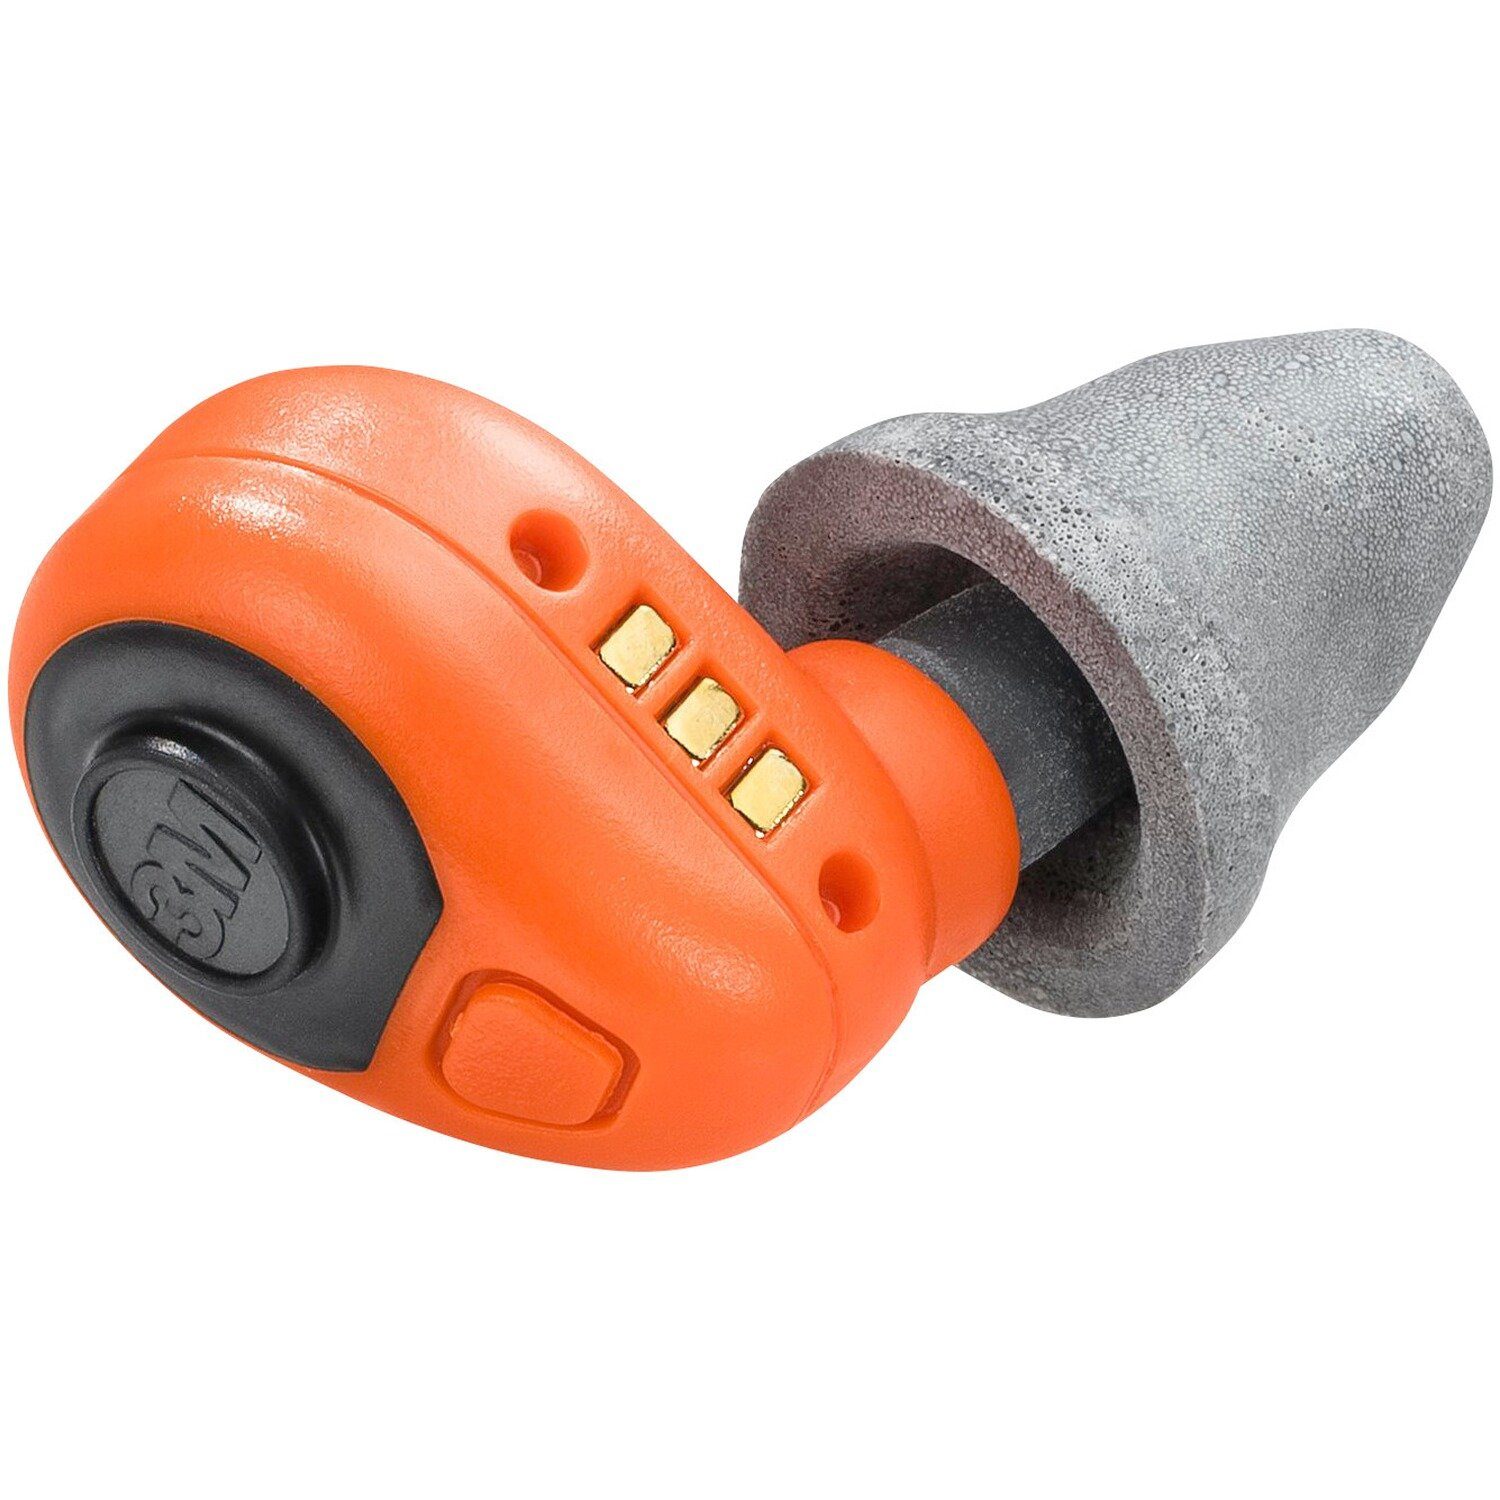 3M LEP-200 Gehörschutzstöpsel Gehörstöpsel OR Hunting elektronisch EU